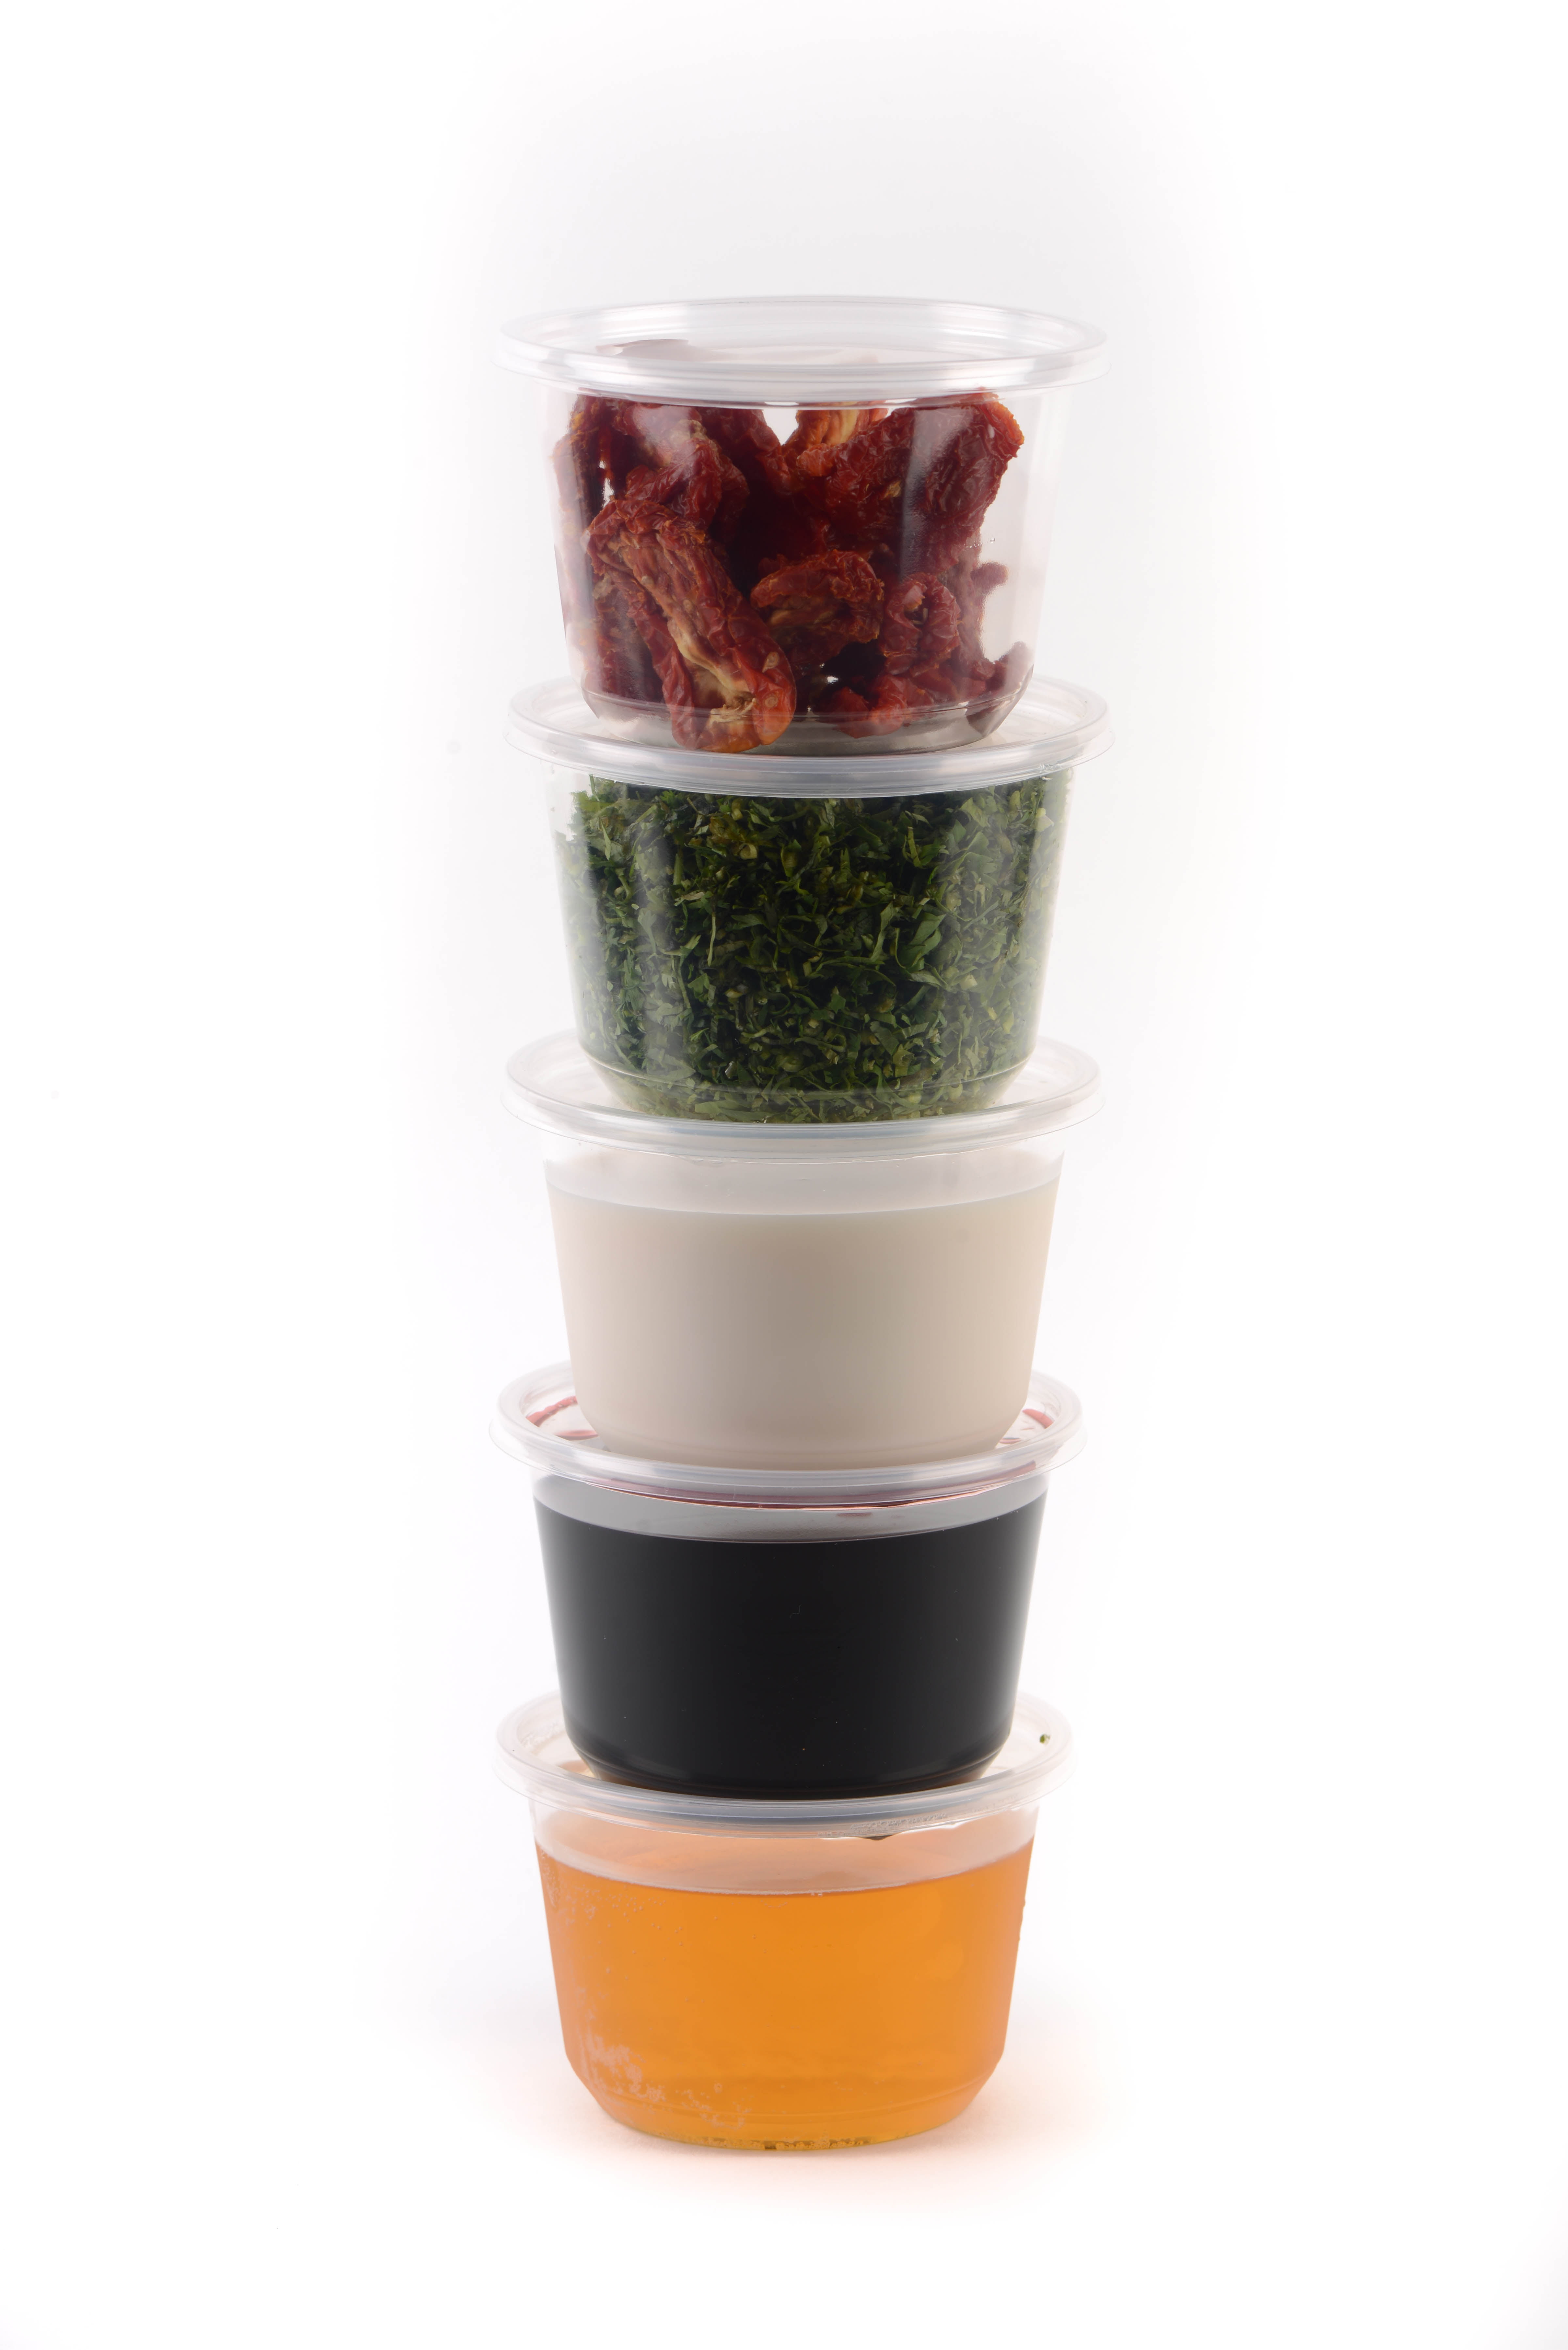 Tezzorio (100 Pack) 8 oz Deli Containers with Lids Combo, BPA-Free  Translucent Plastic Deli Food Storage Containers with Lids, To Go/Take Out  Food